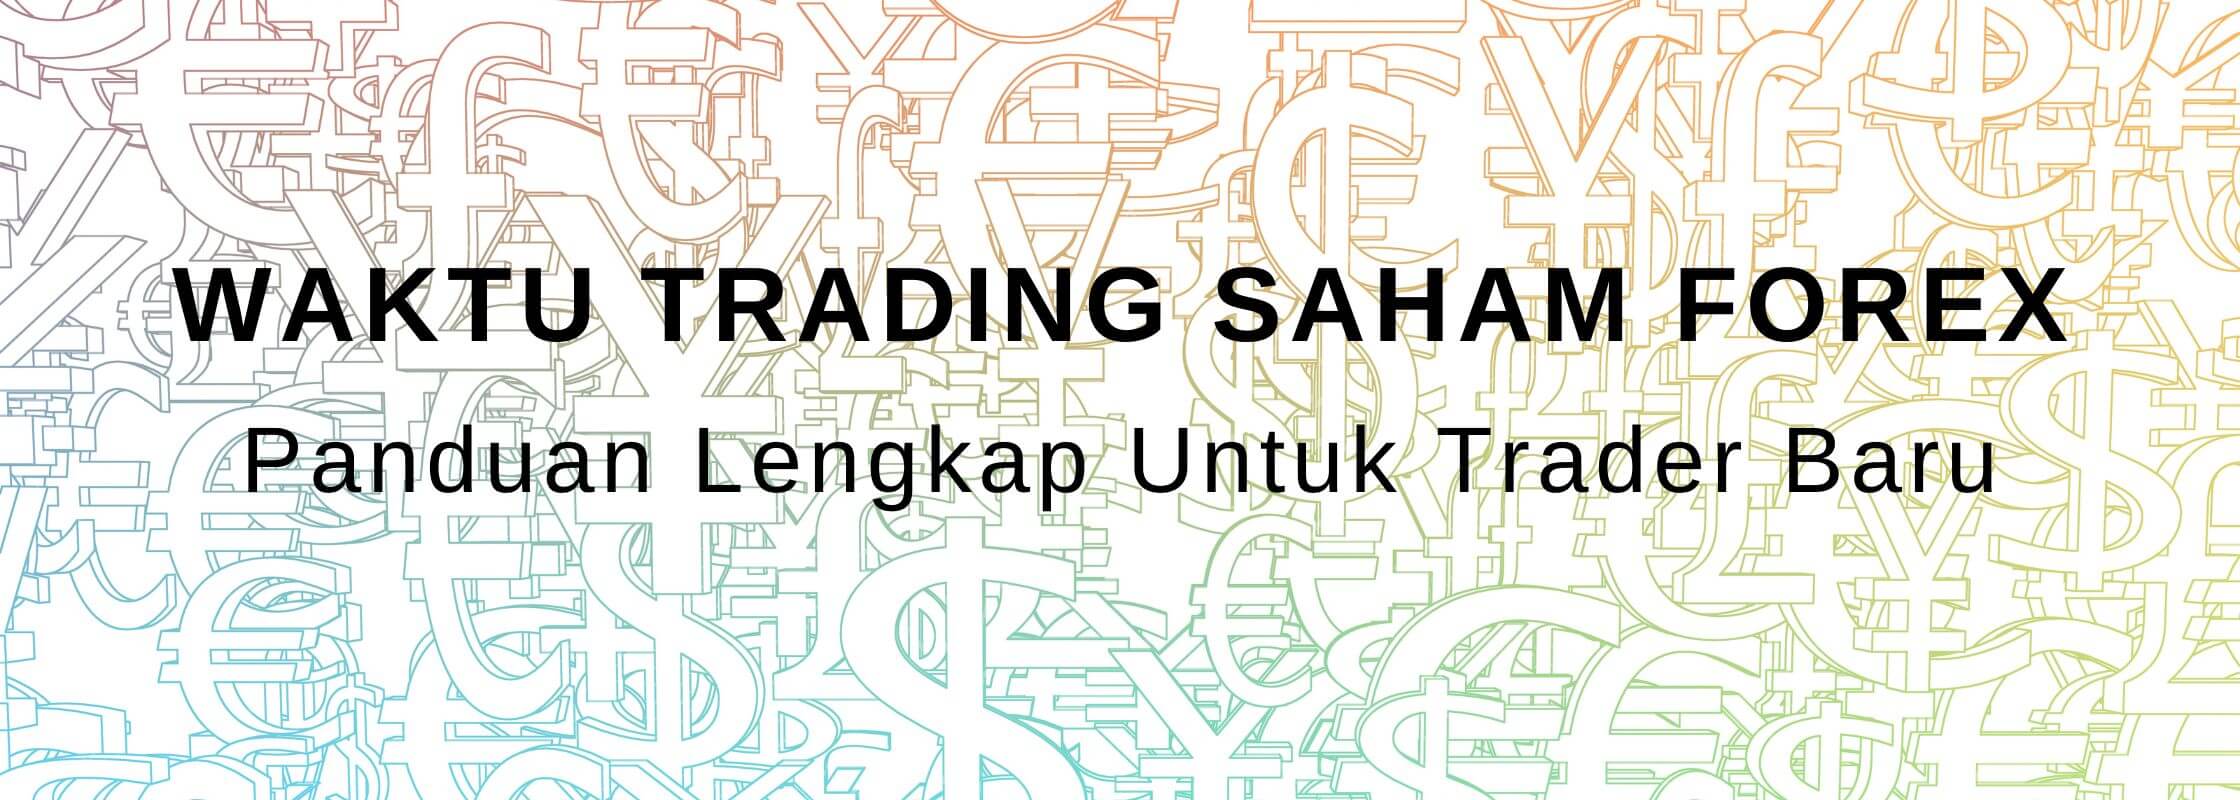 waktu trading saham forex di malaysia